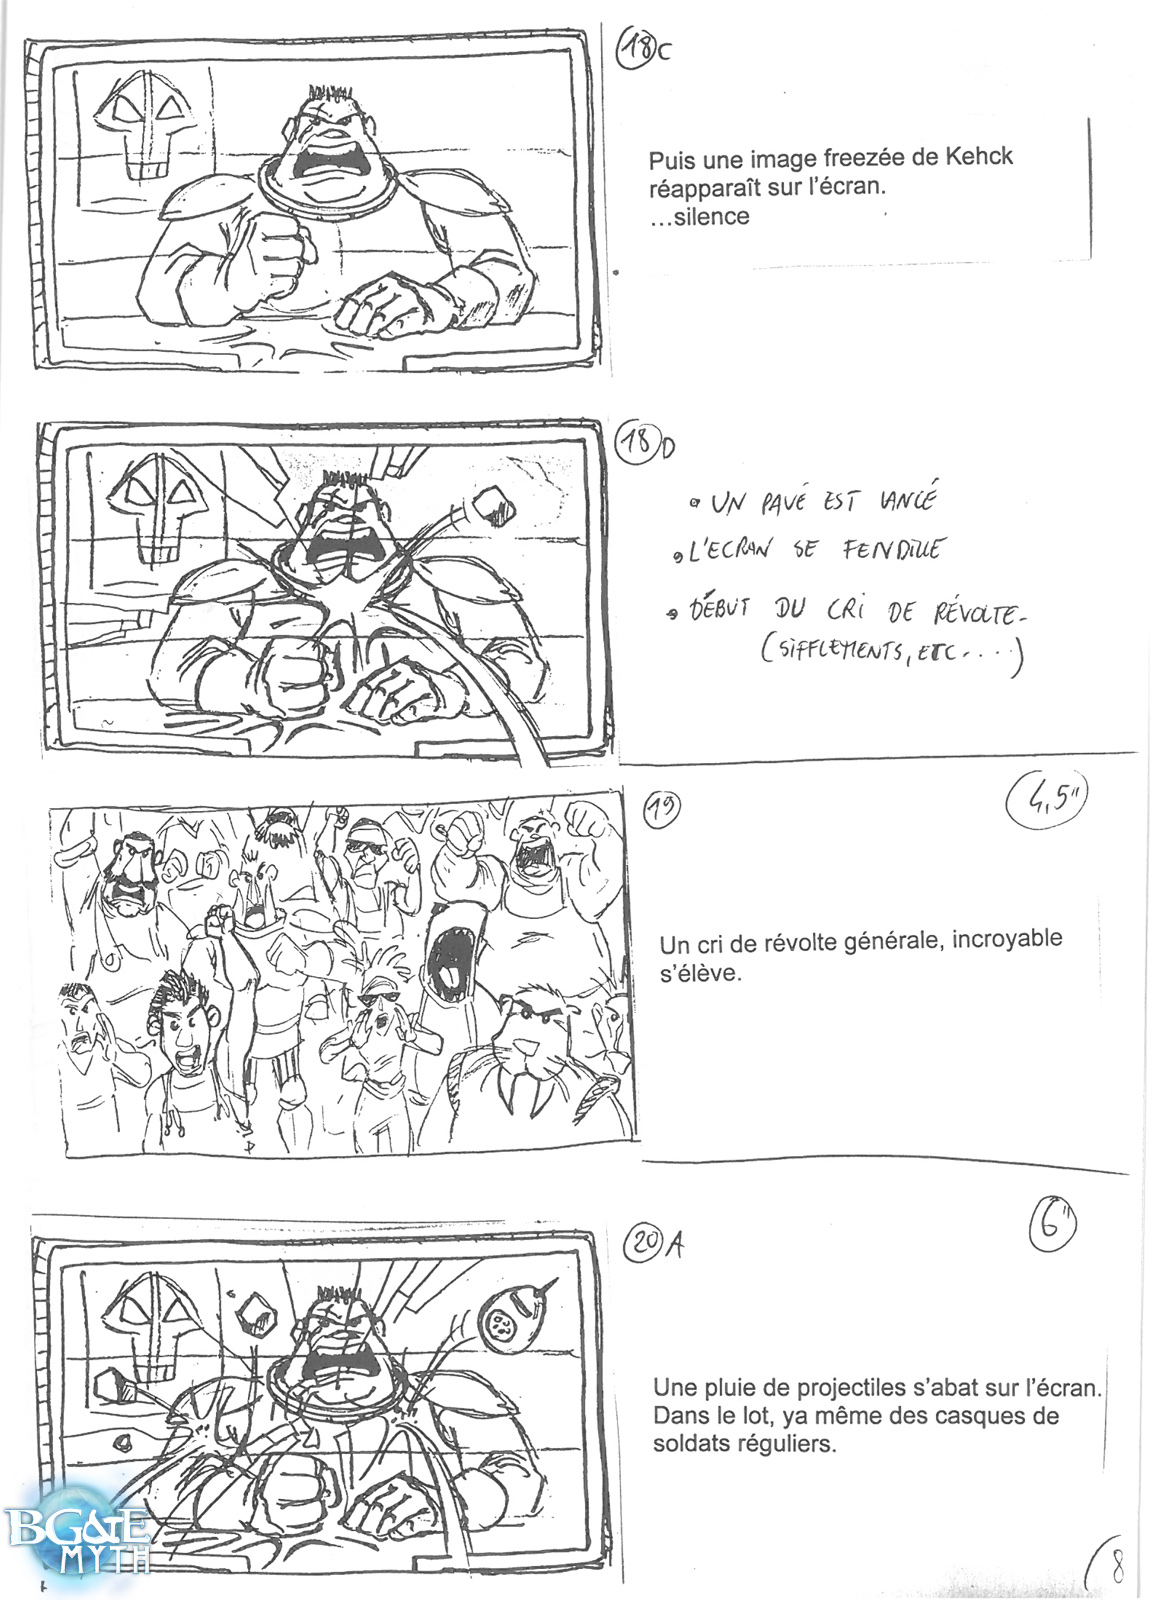 [Storyboard] Diffusion du reportage - Page 15